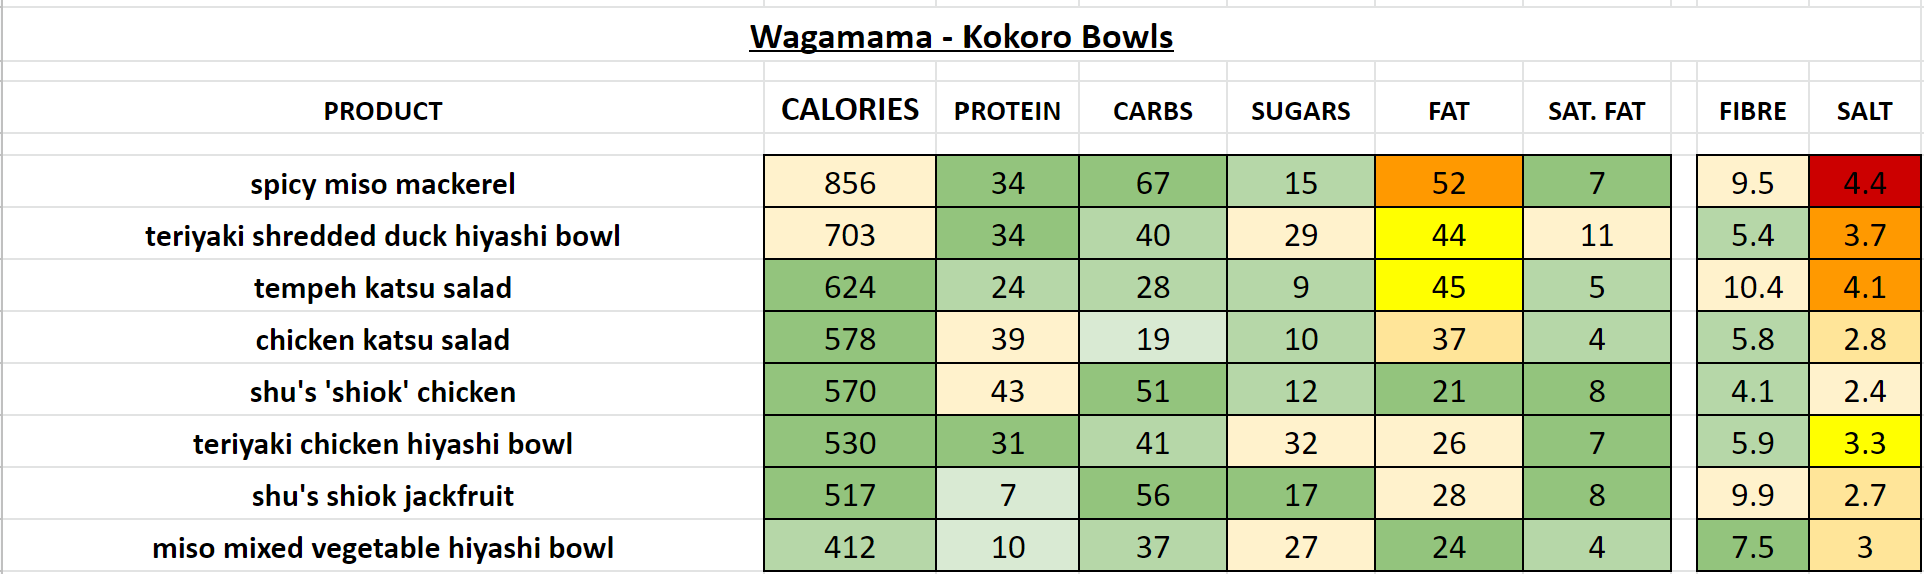 Nutrition Information and Calories wagamama kokoro bowls